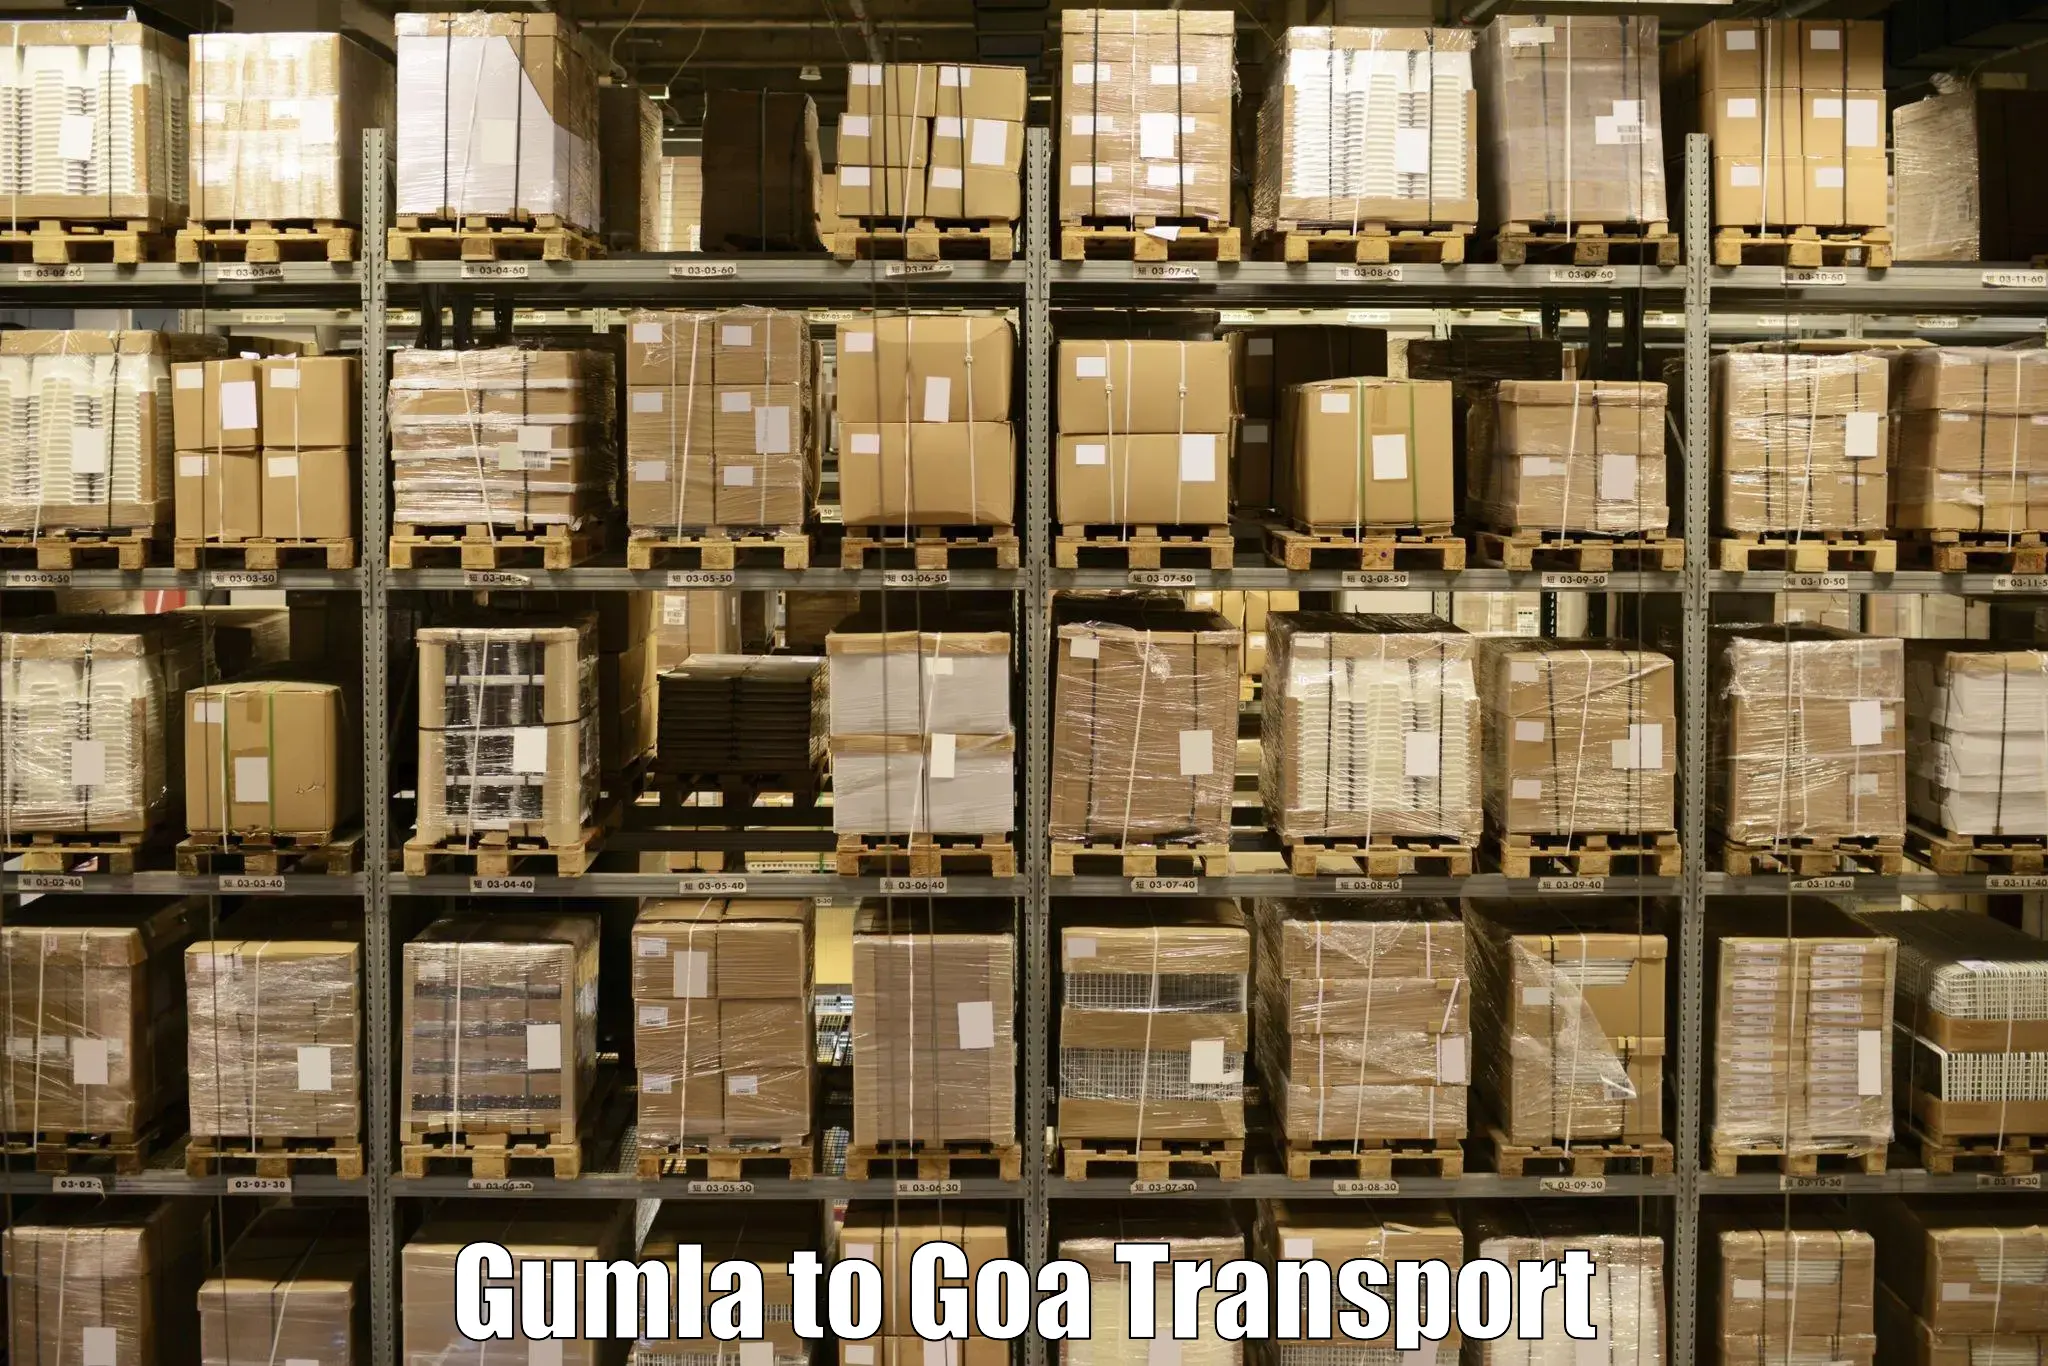 Daily transport service Gumla to Vasco da Gama